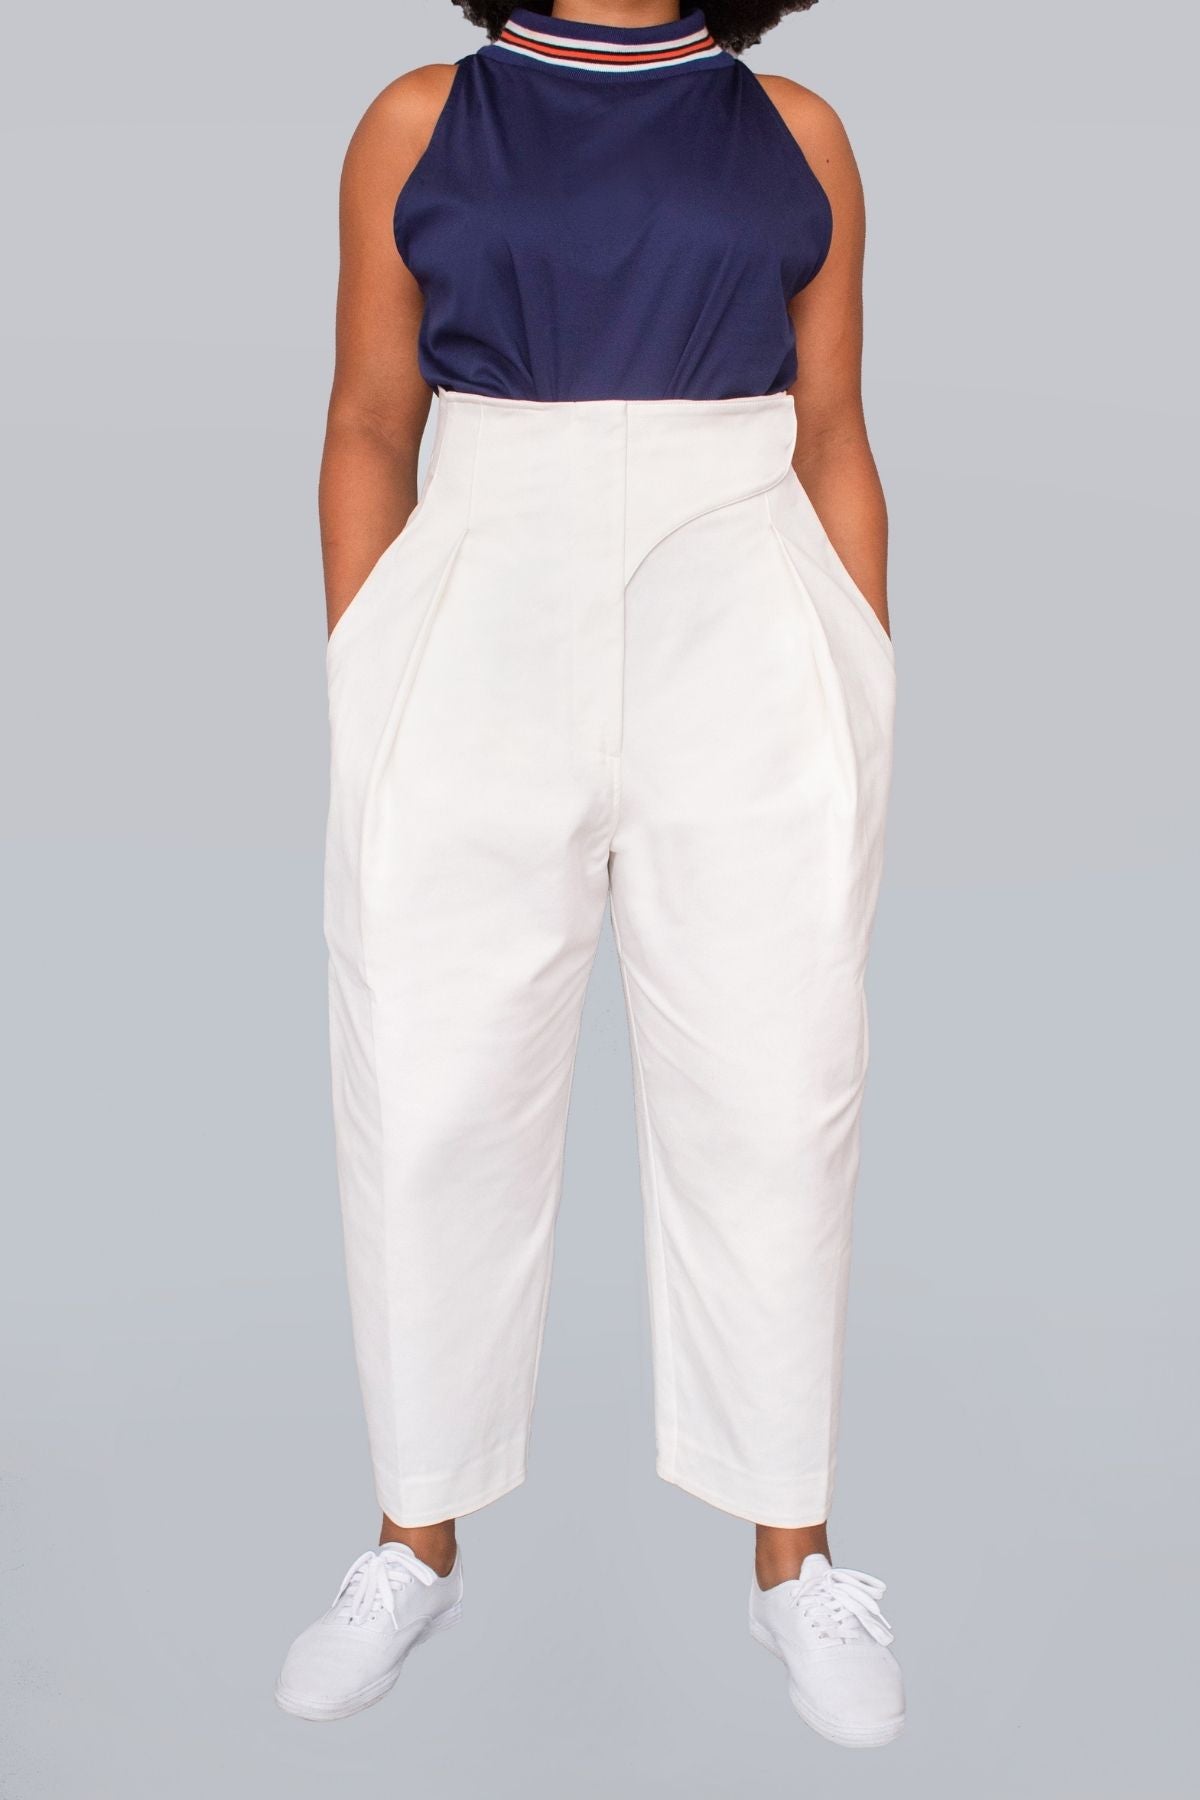 Plus Size Women's Thai Harem Palazzo Pants in Solid White – Harem Pants